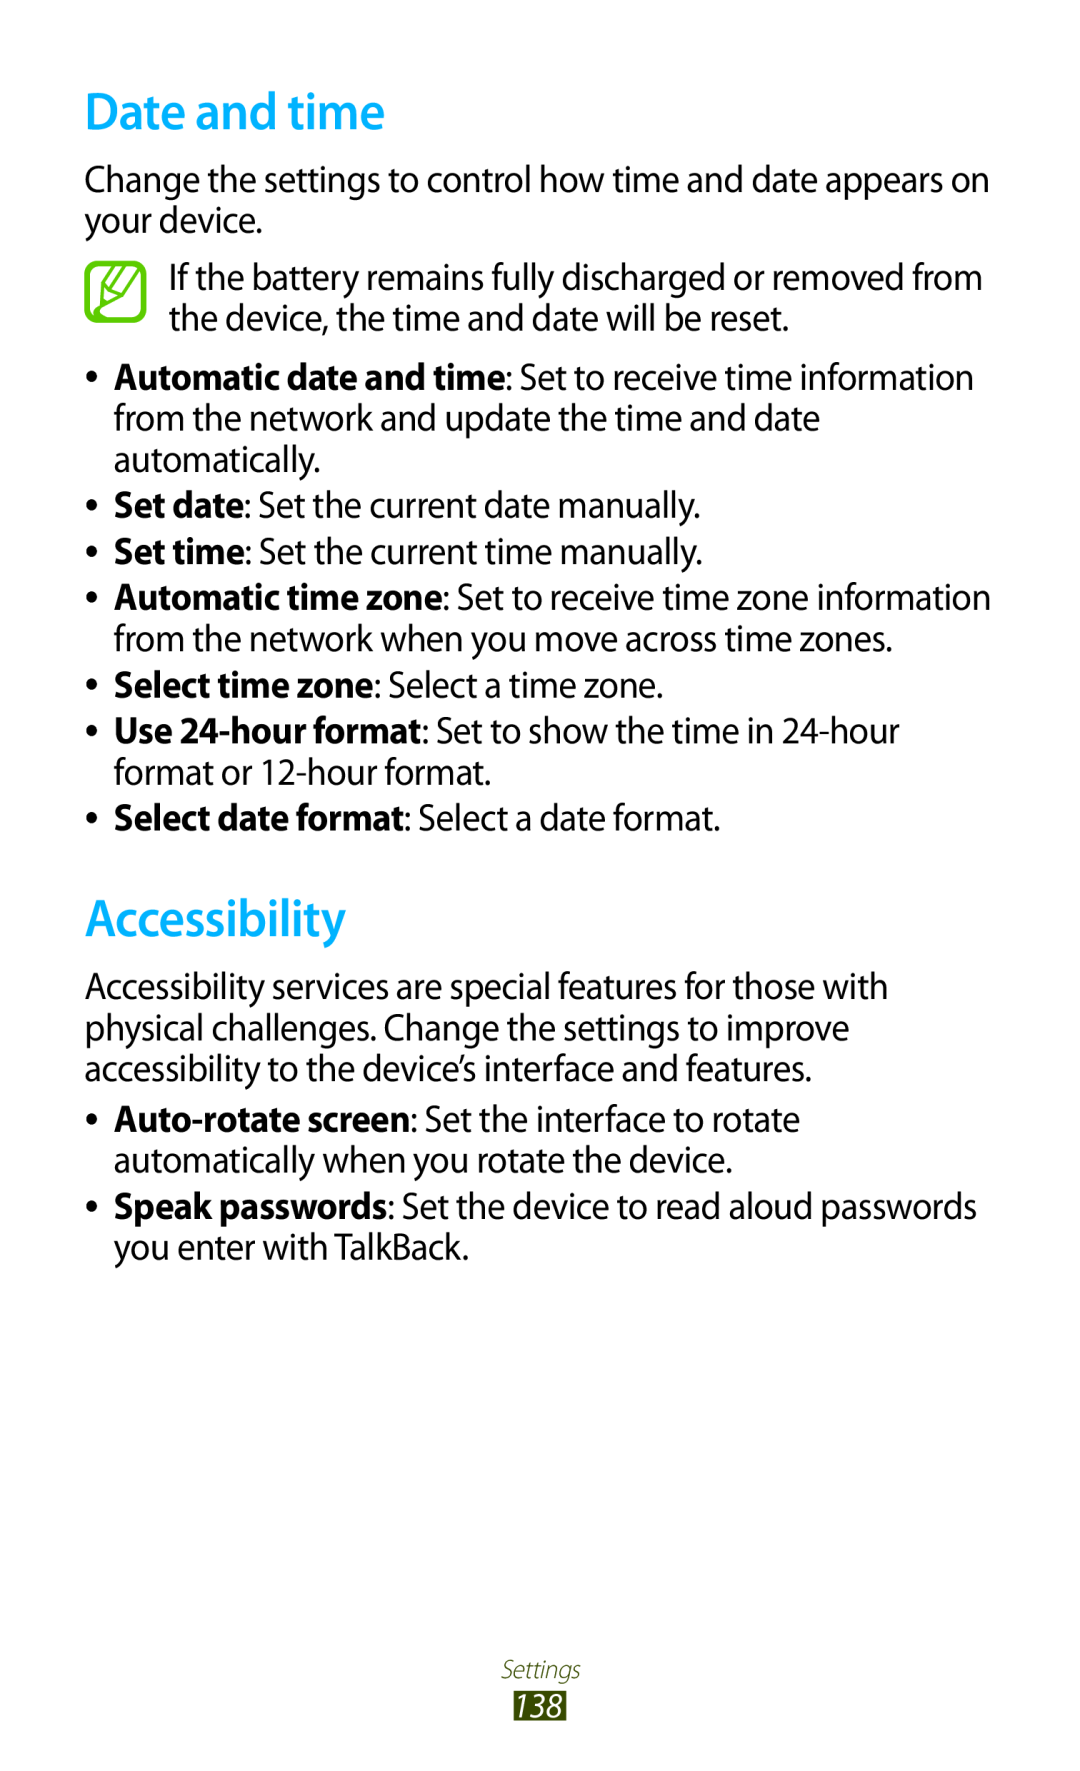 Samsung GT-S7560UWAVDH, GT-S7560ZKAVDR, GT-S7560ZKAPRT, GT-S7560UWAWIN, GT-S7560UWAVDR manual Date and time, Accessibility 